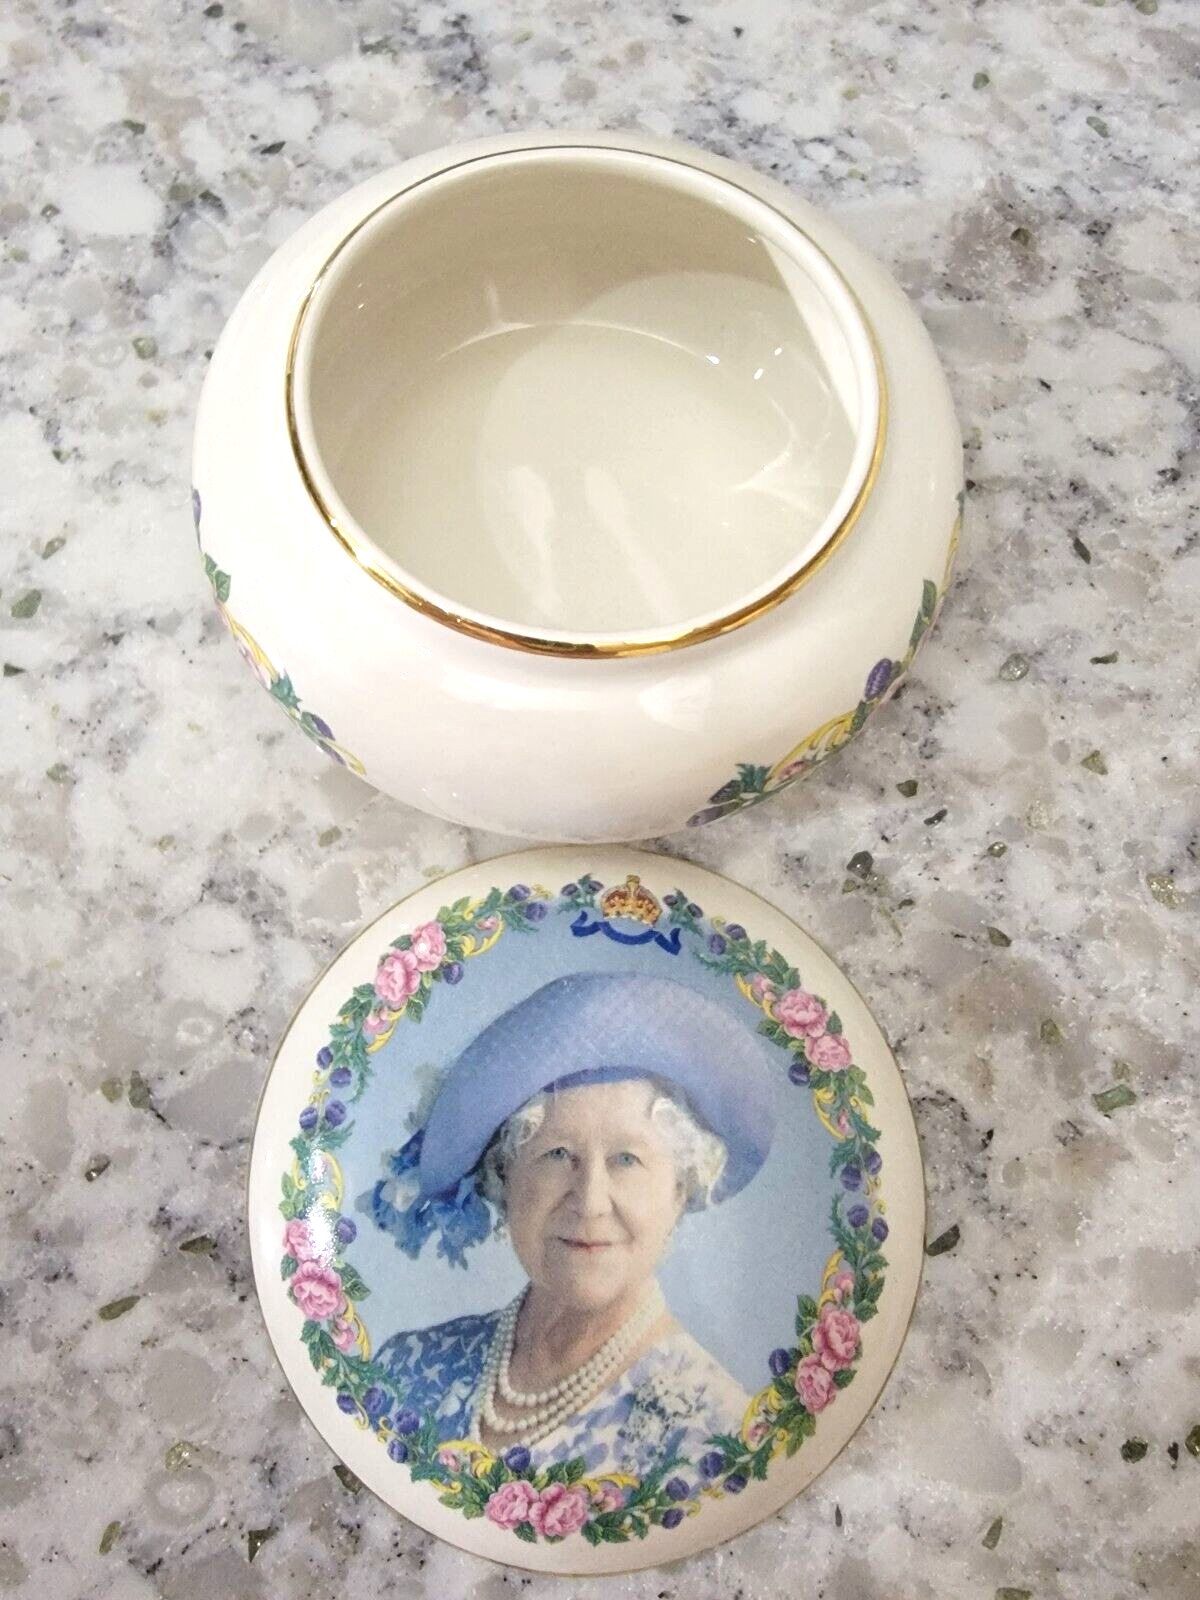 Queen Elizabeth Abbey Pottery Commemorate 100th Bday Dish 2000 24K Gold Decor Без бренда - фотография #2